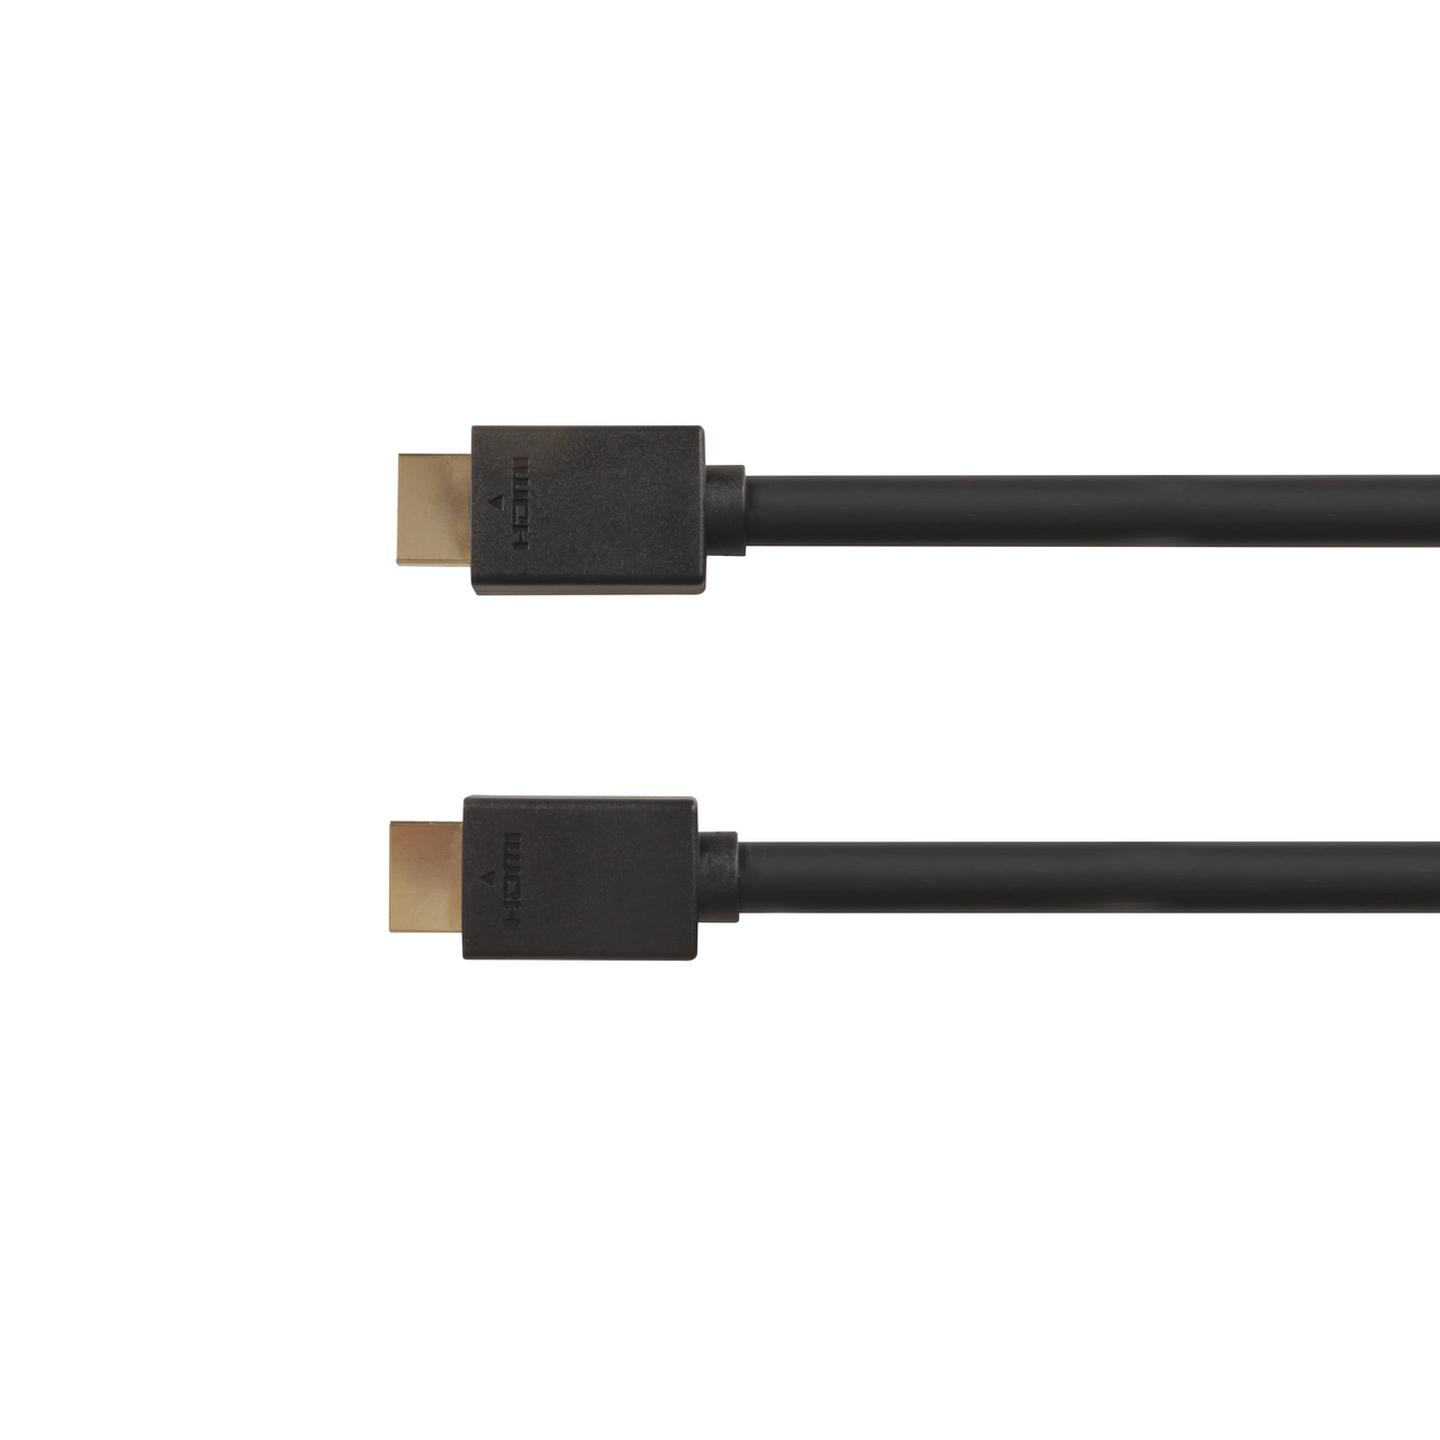 Economy 10m HDMI 1.4 Cable